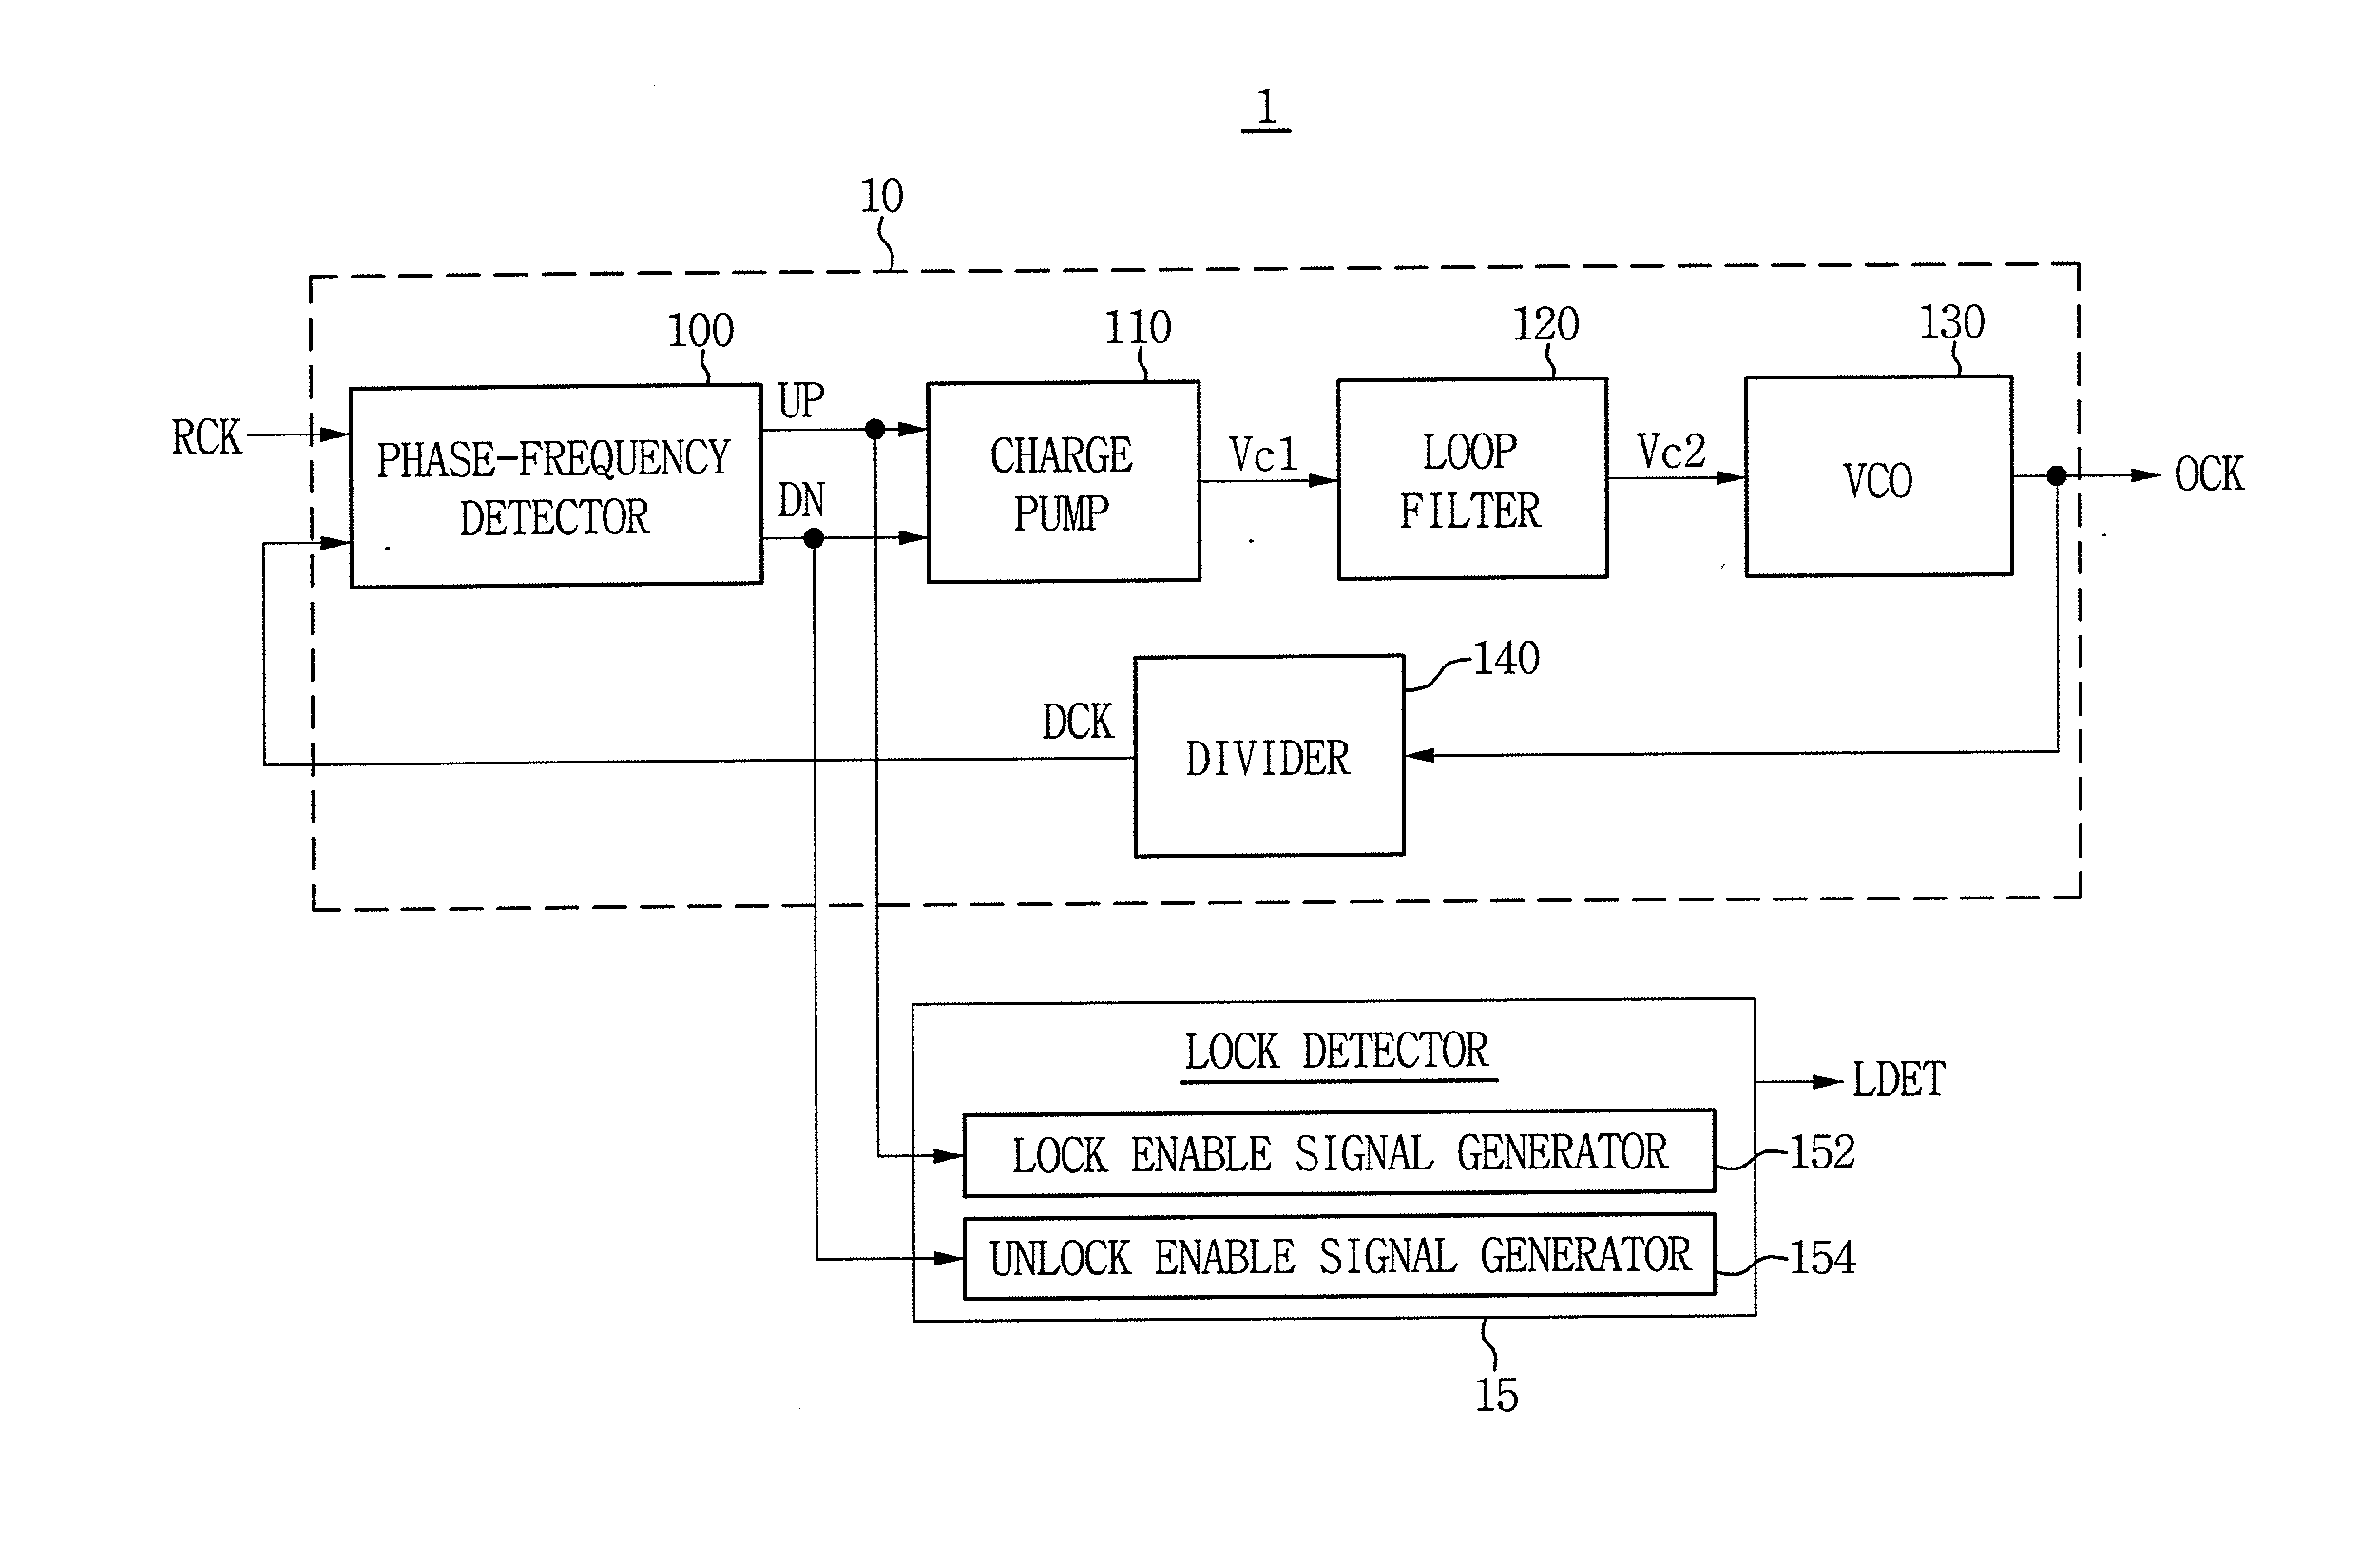 Phase locked loop circuit, method of detecting lock, and system having the circuit